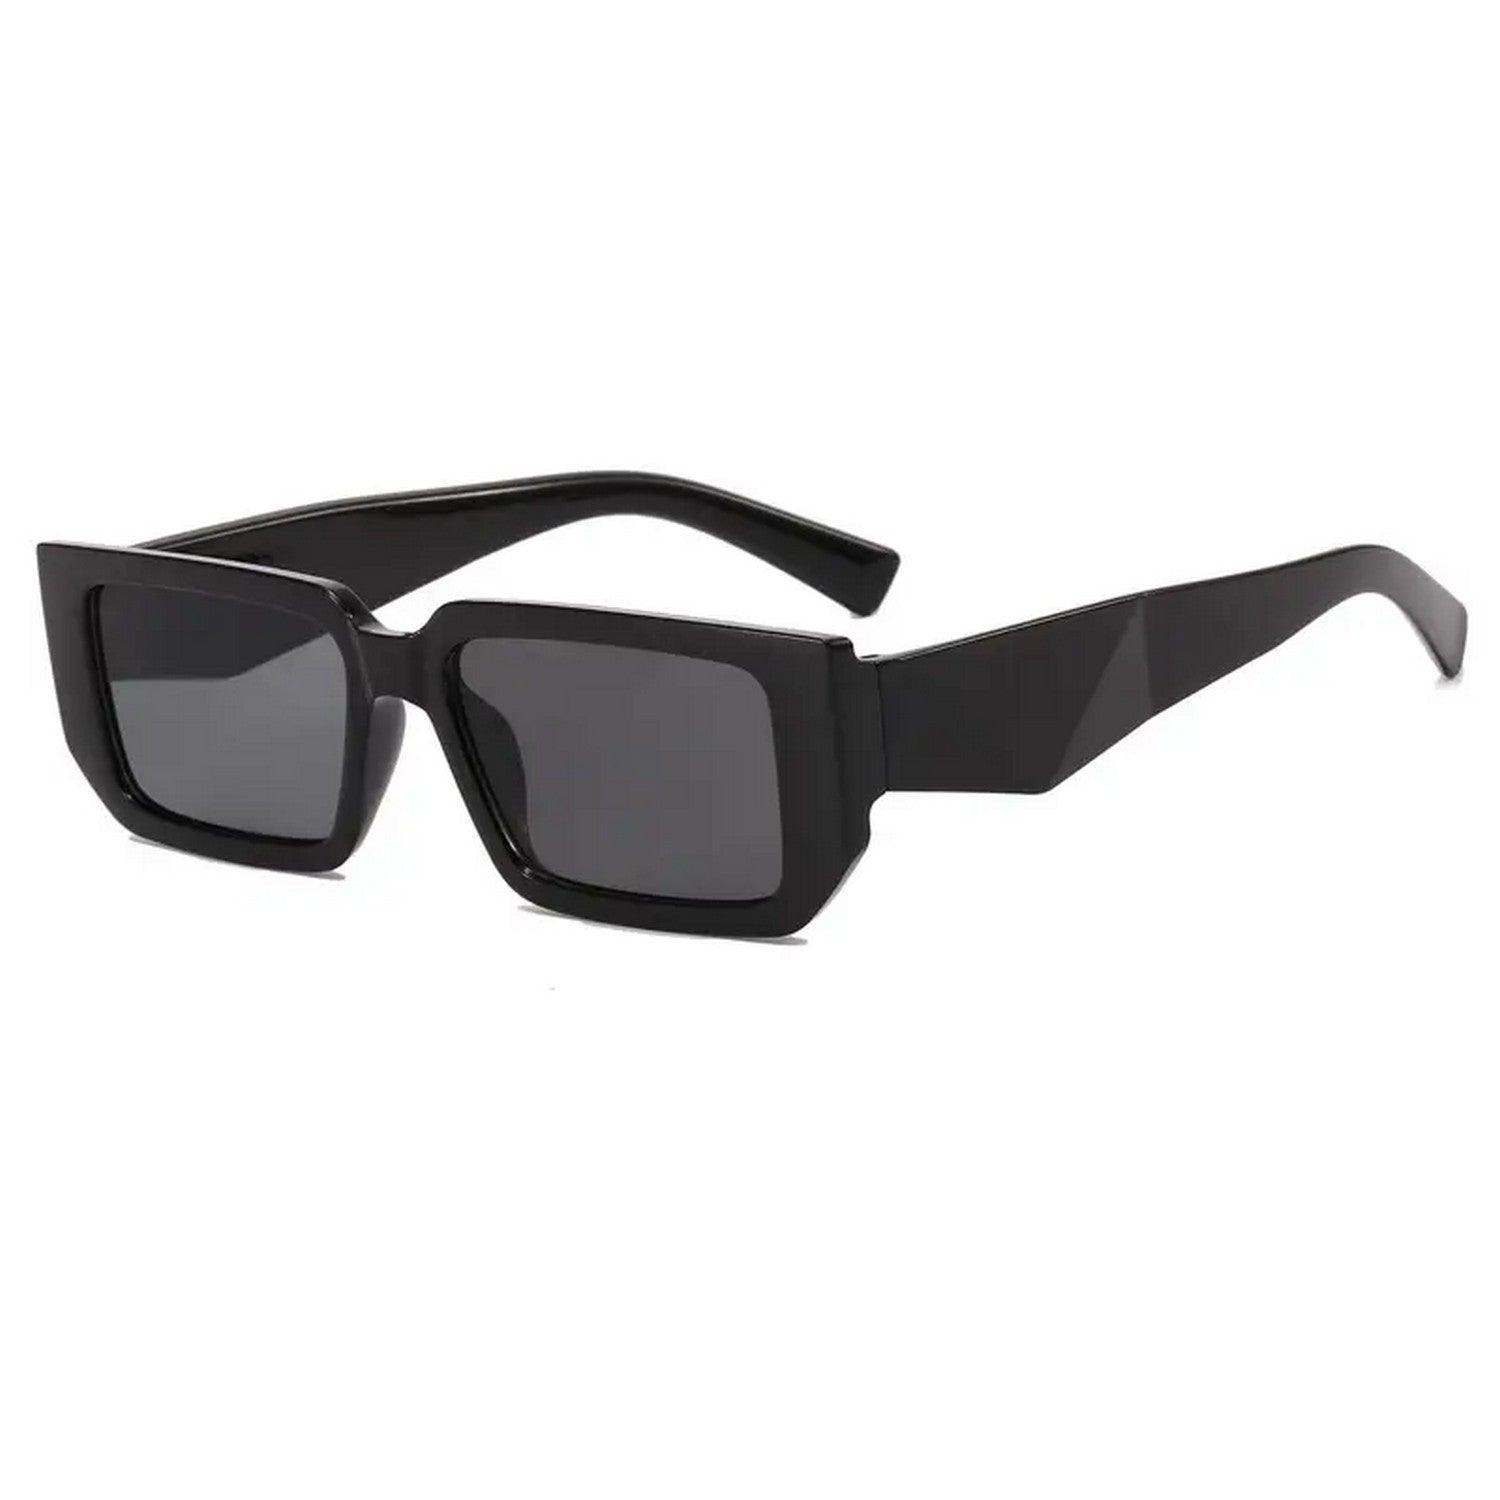 Dervin UV Protection Rectangular wide leg Sunglasses for Men and Women (Black) - Dervin